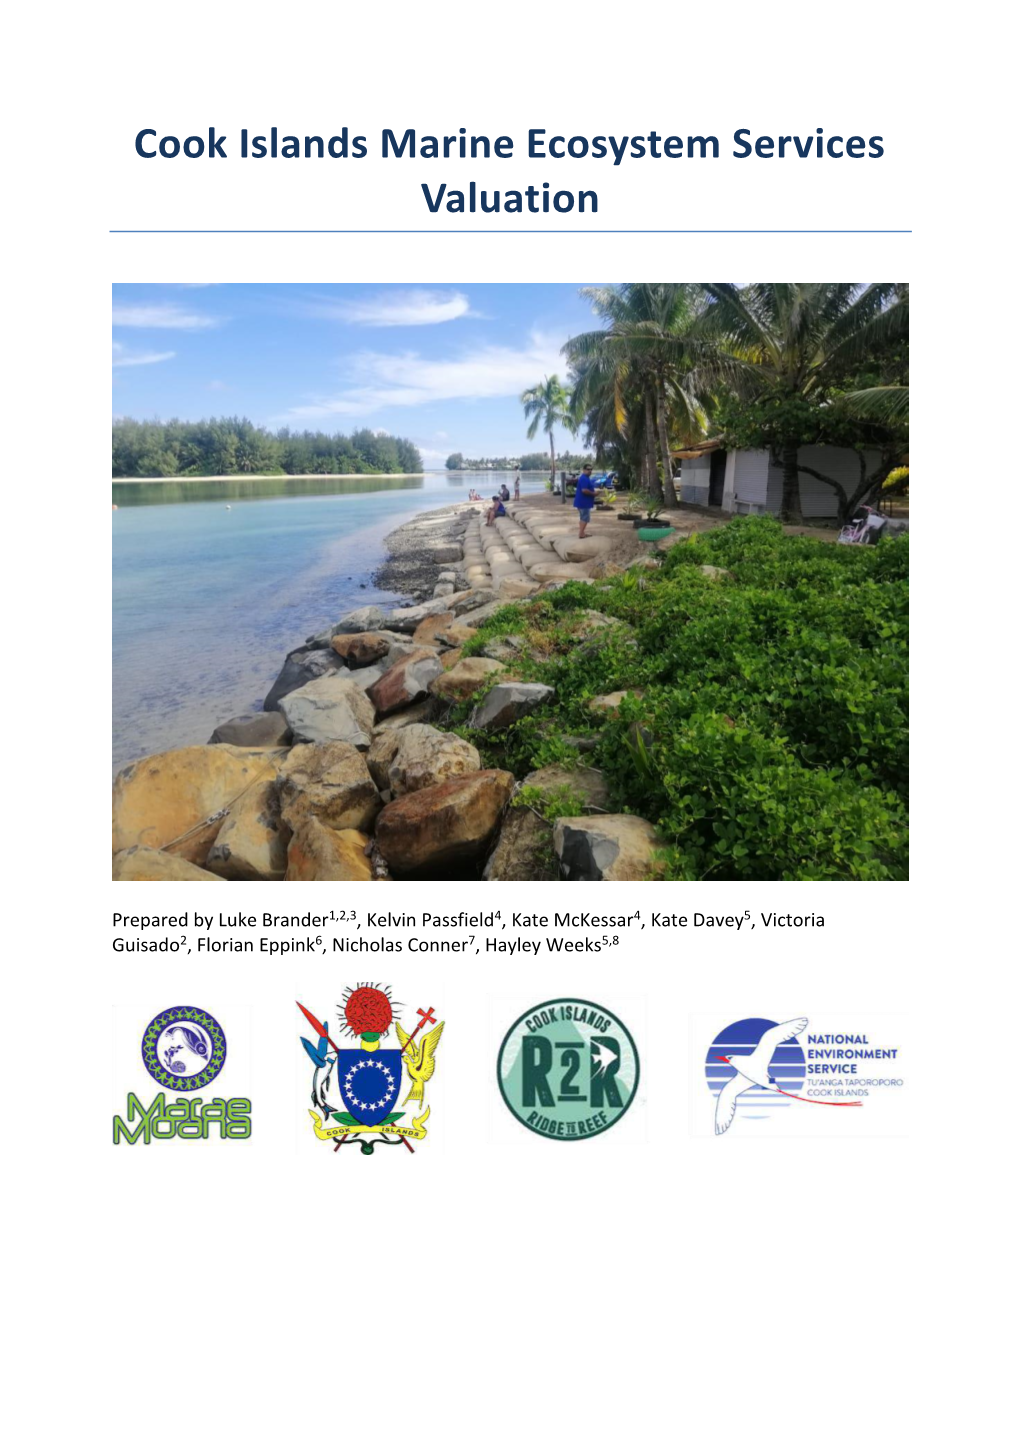 Cook Islands Marine Ecosystem Services Valuation